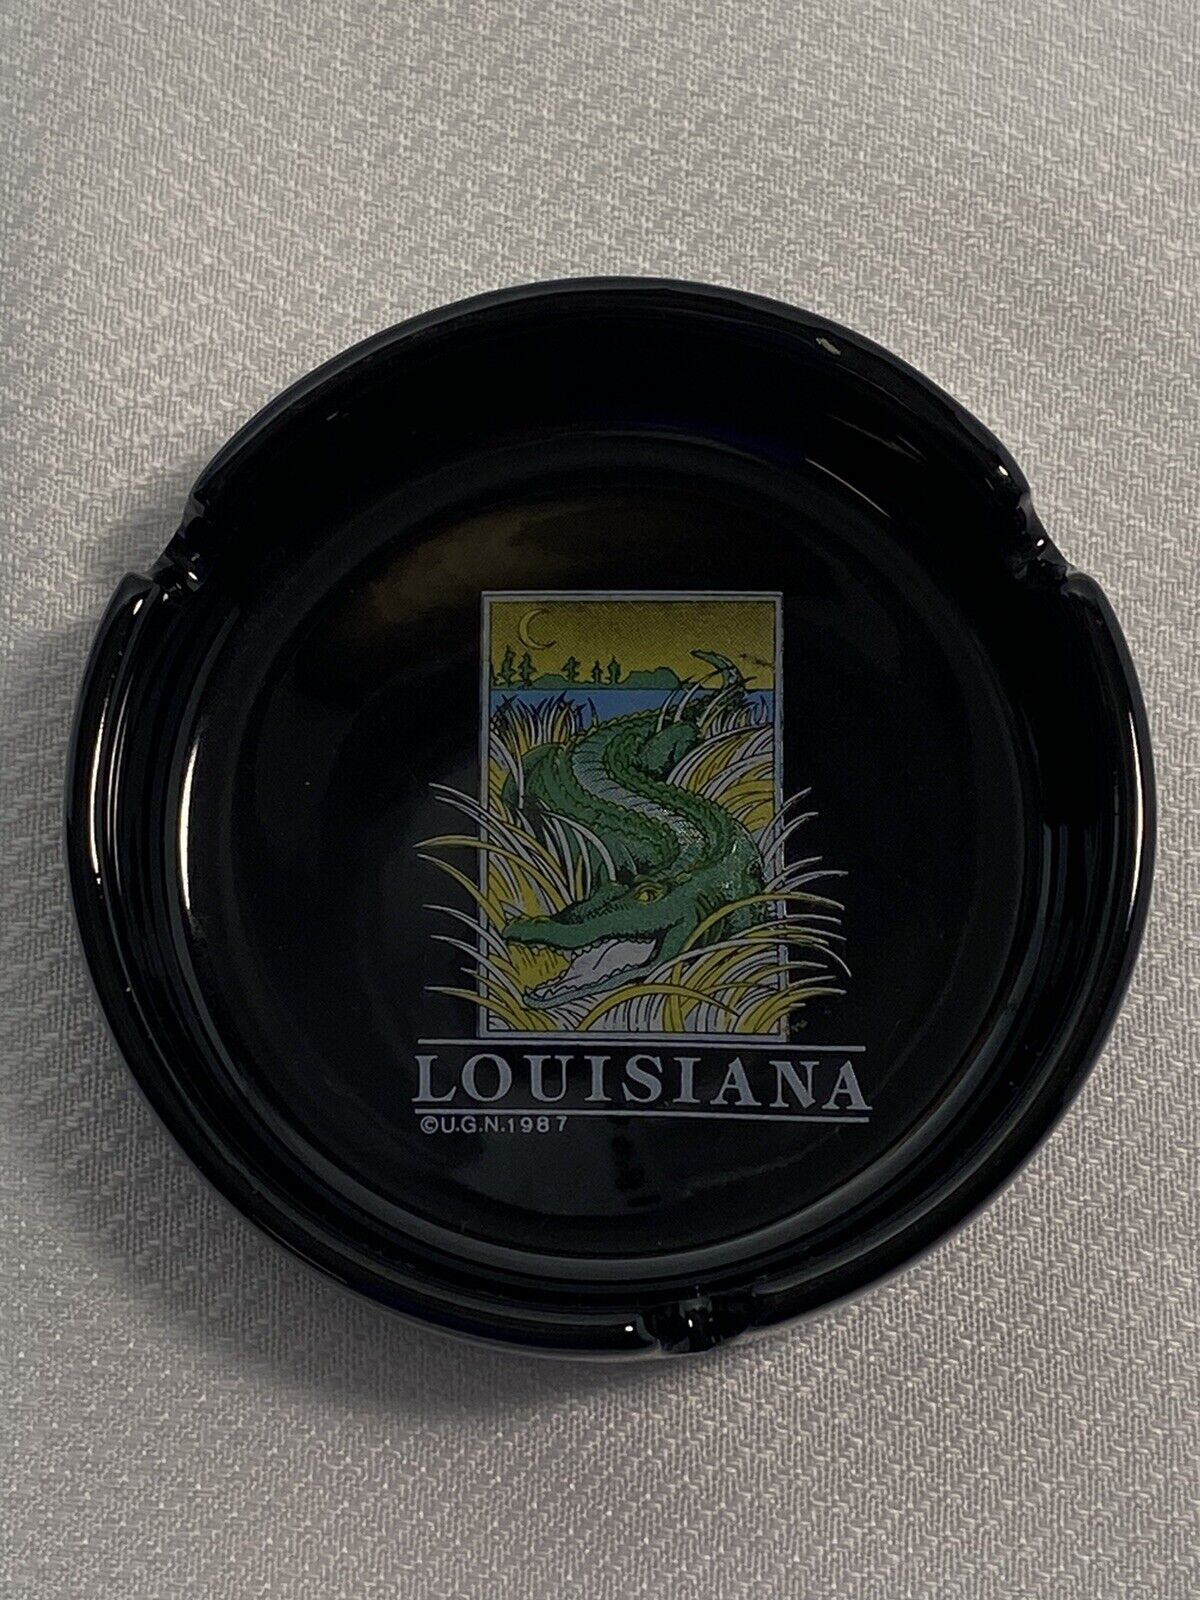 Vintage Rare 1987 U.G.N. Louisiana Swamp Alligator Ashtray Tobacco Ceramic